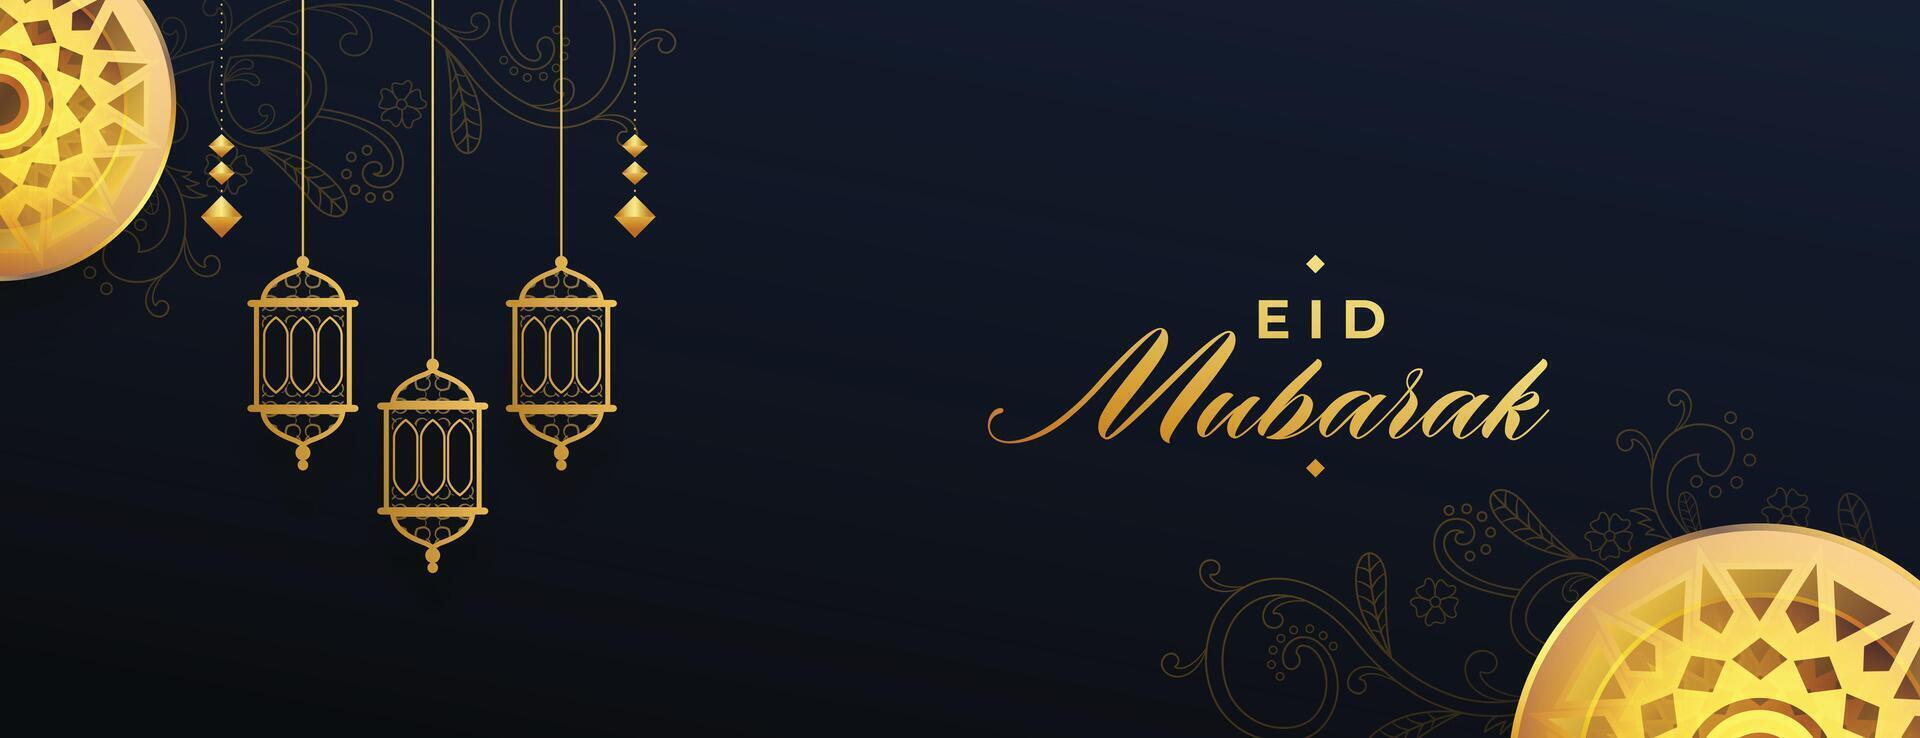 eid mubarak golden and black banner with lantern design vector